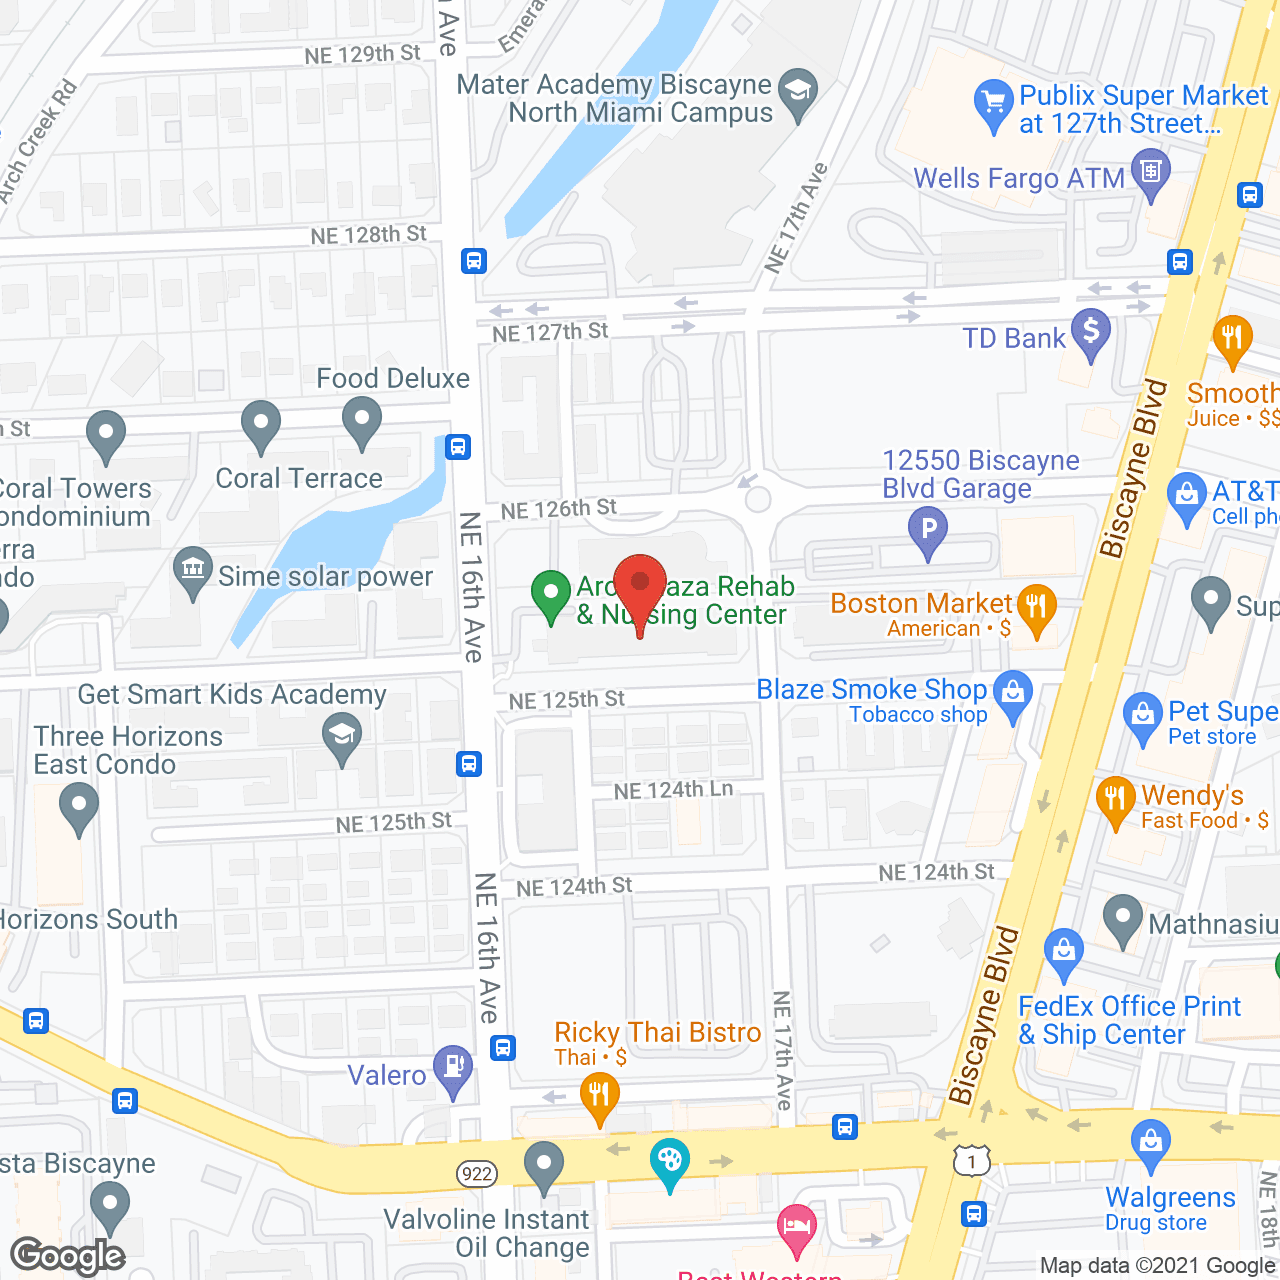 Arch Plaza Rehabilitation & Nursing Center in google map